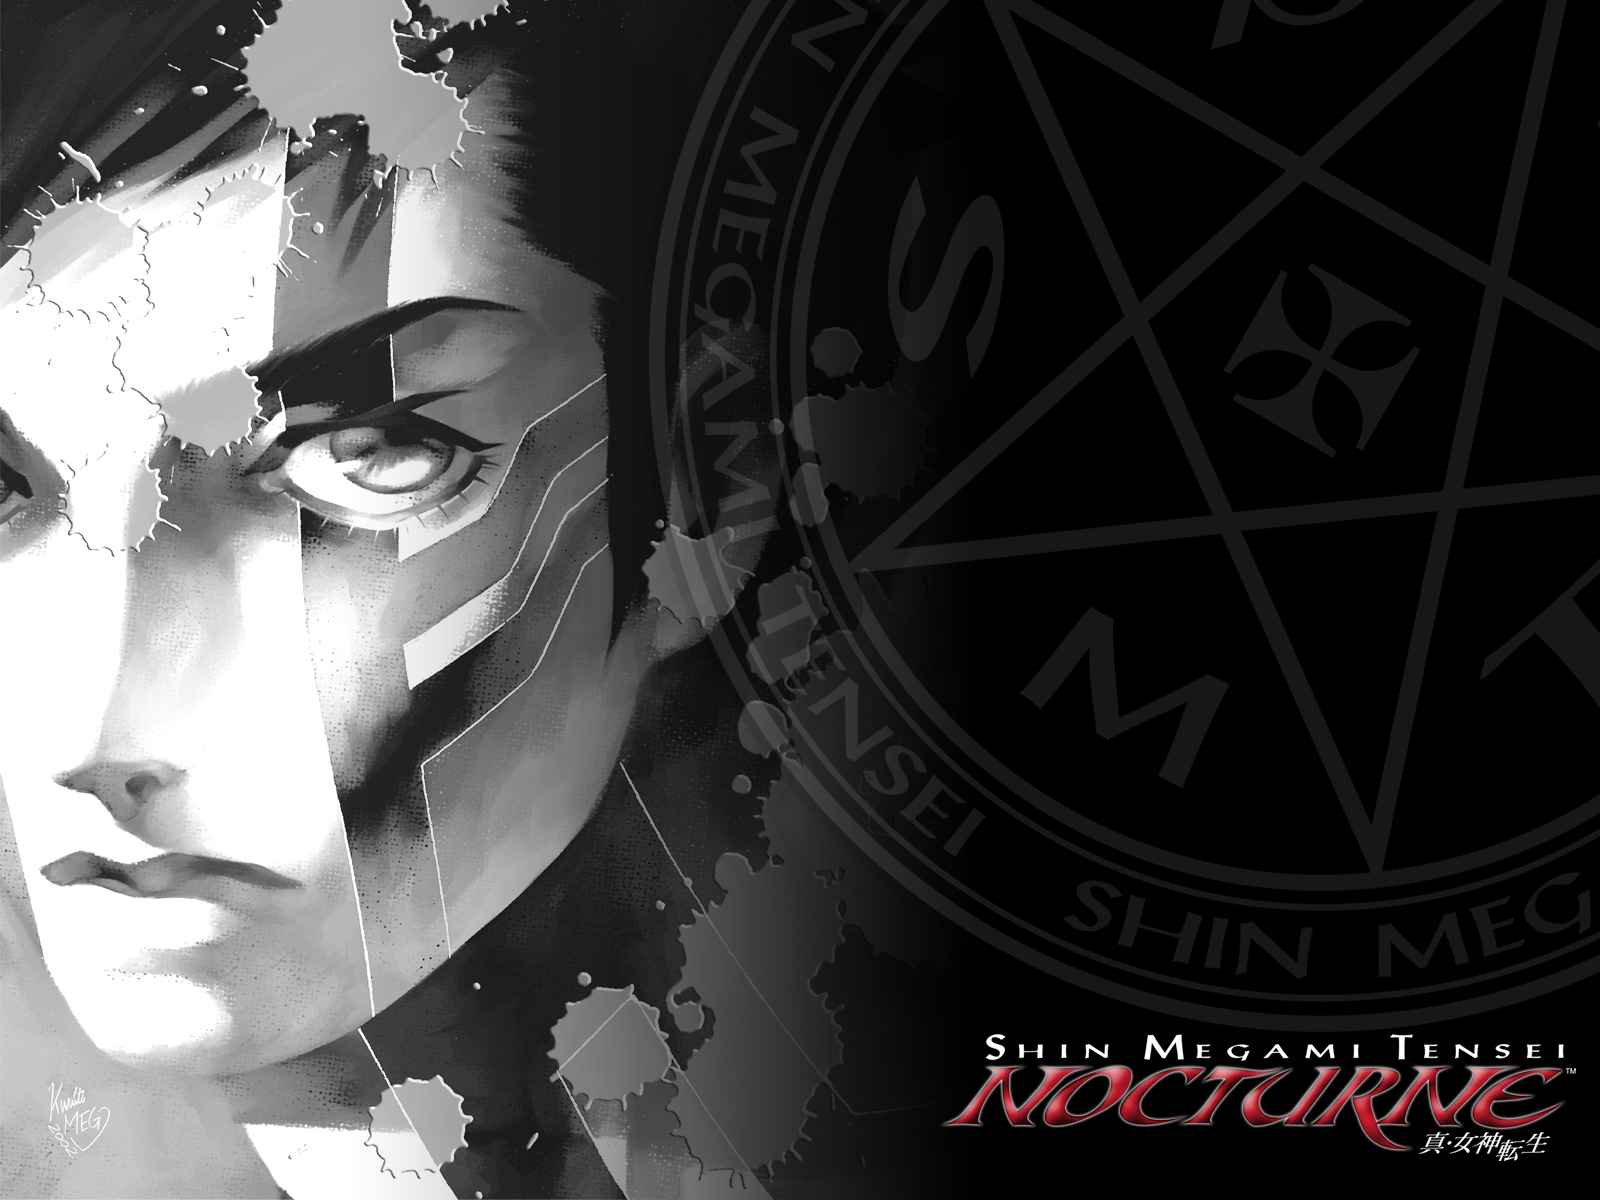 Atlus USA presents Shin Megami Tensei Nocturne